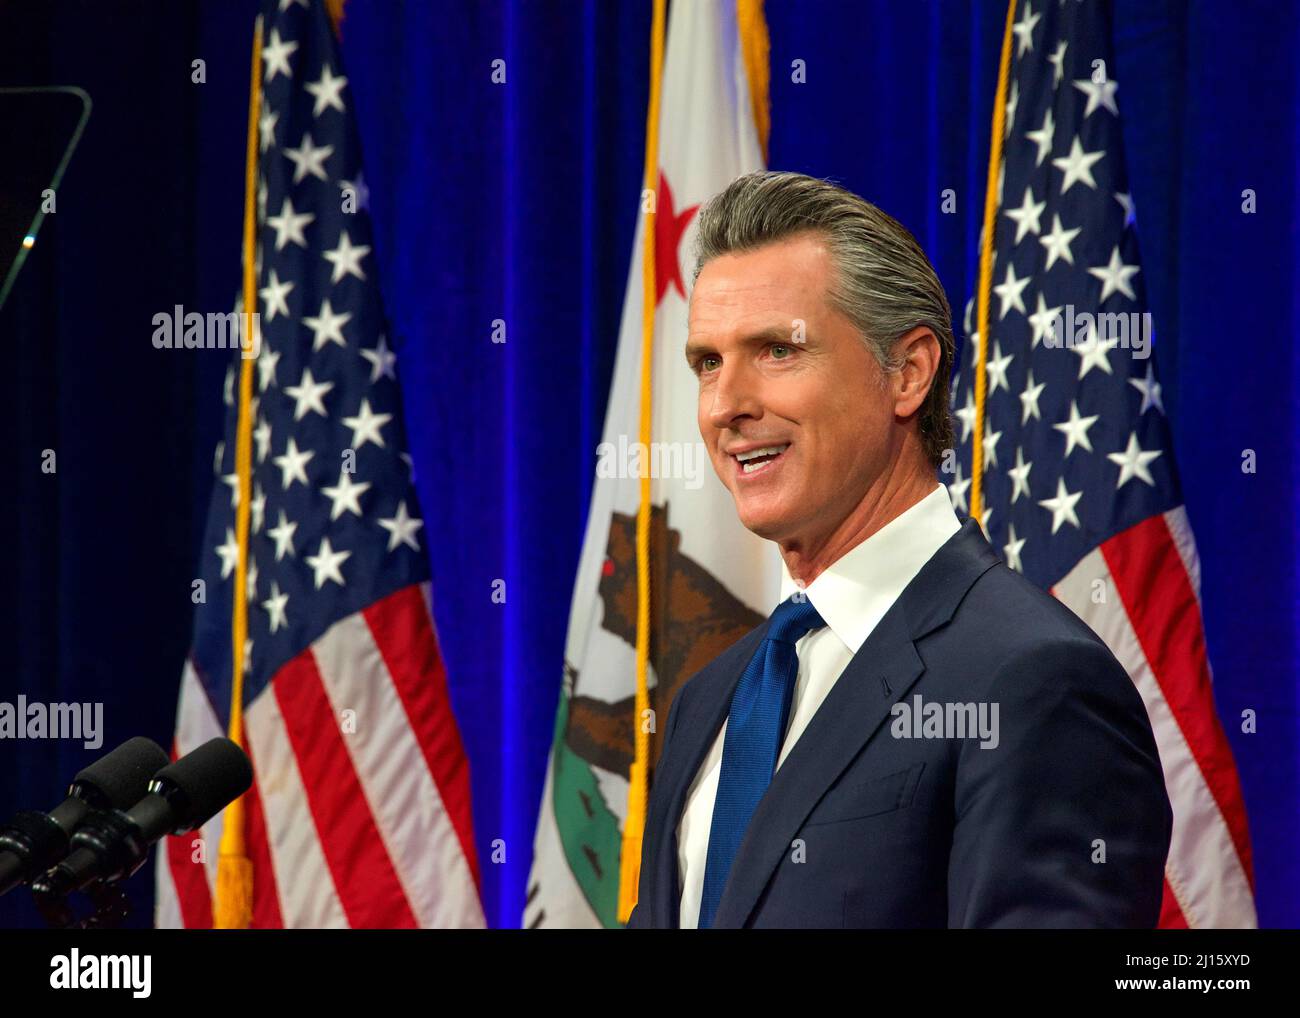 Sacramento, CA - March 8, 2022: California Governor Gavin Newsom speaking at the State of the State address in Sacramento, CA. Stock Photo